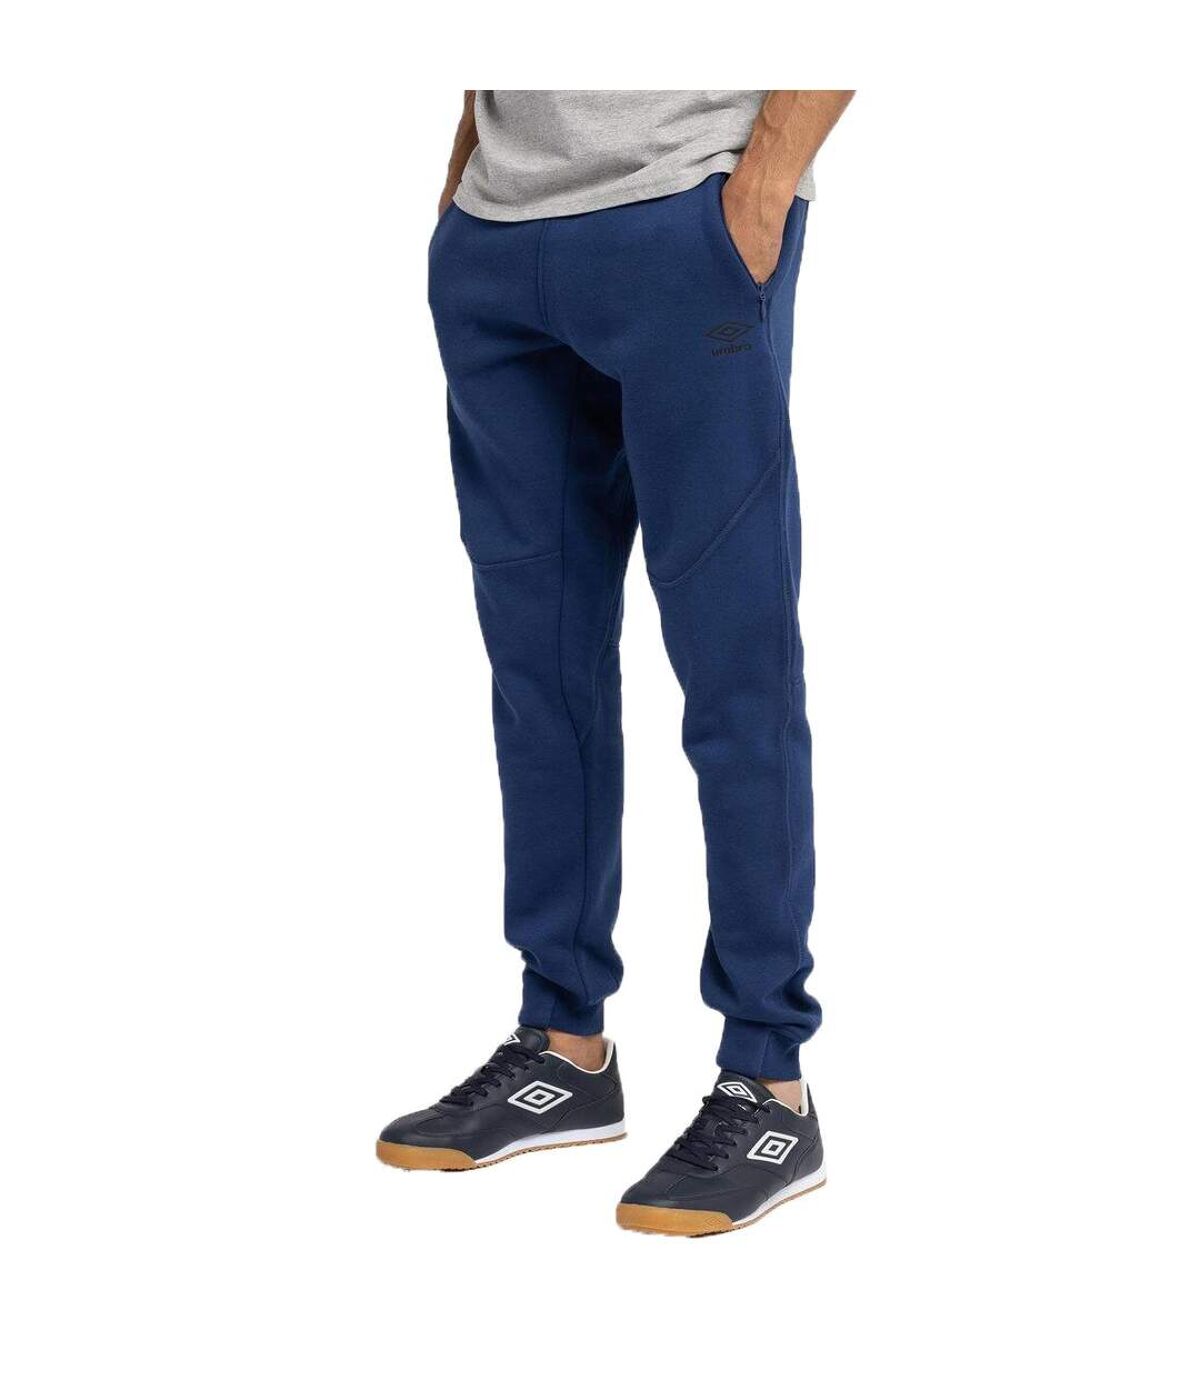 Umbro - Pantalon de jogging PRO ELITE - Homme (Bleu marine) - UTUO143